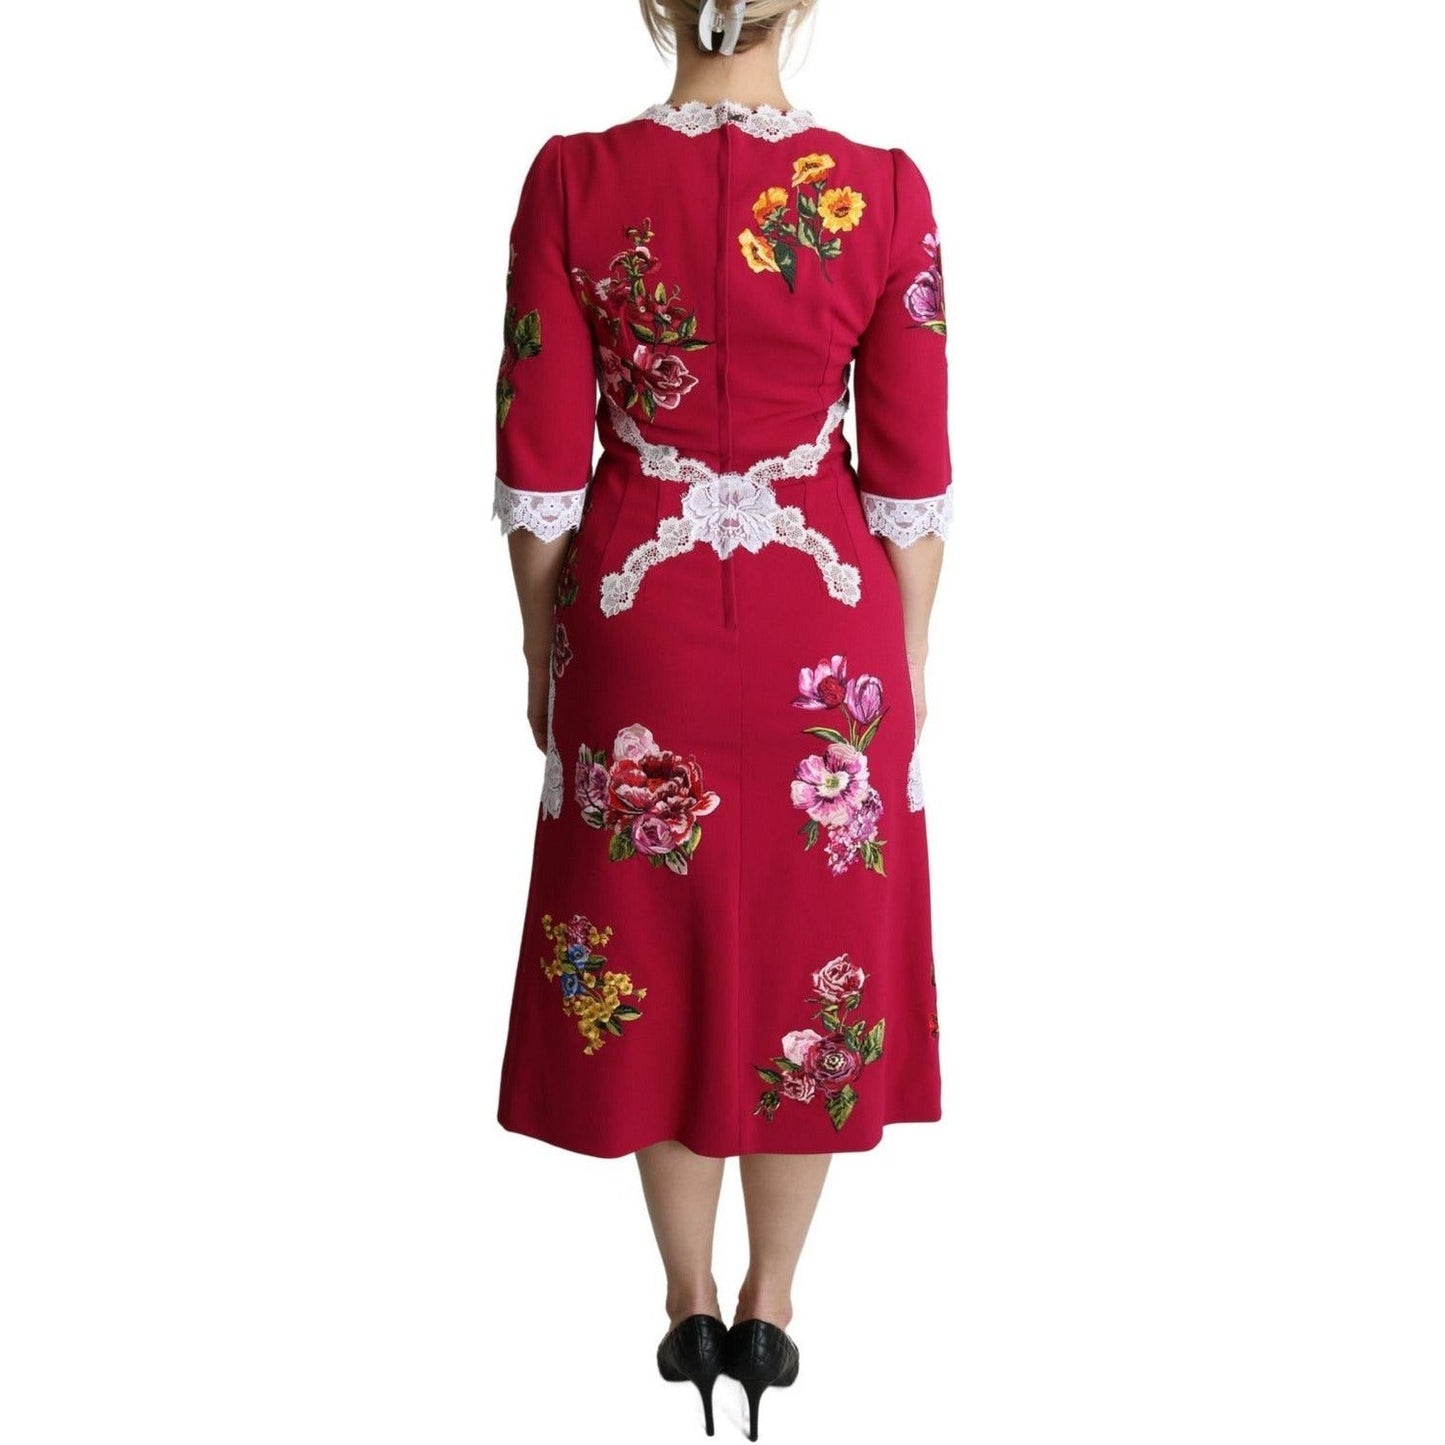 Dolce & Gabbana Floral Embroidered Sheath Midi Dress red-floral-embroidered-sheath-midi-dress